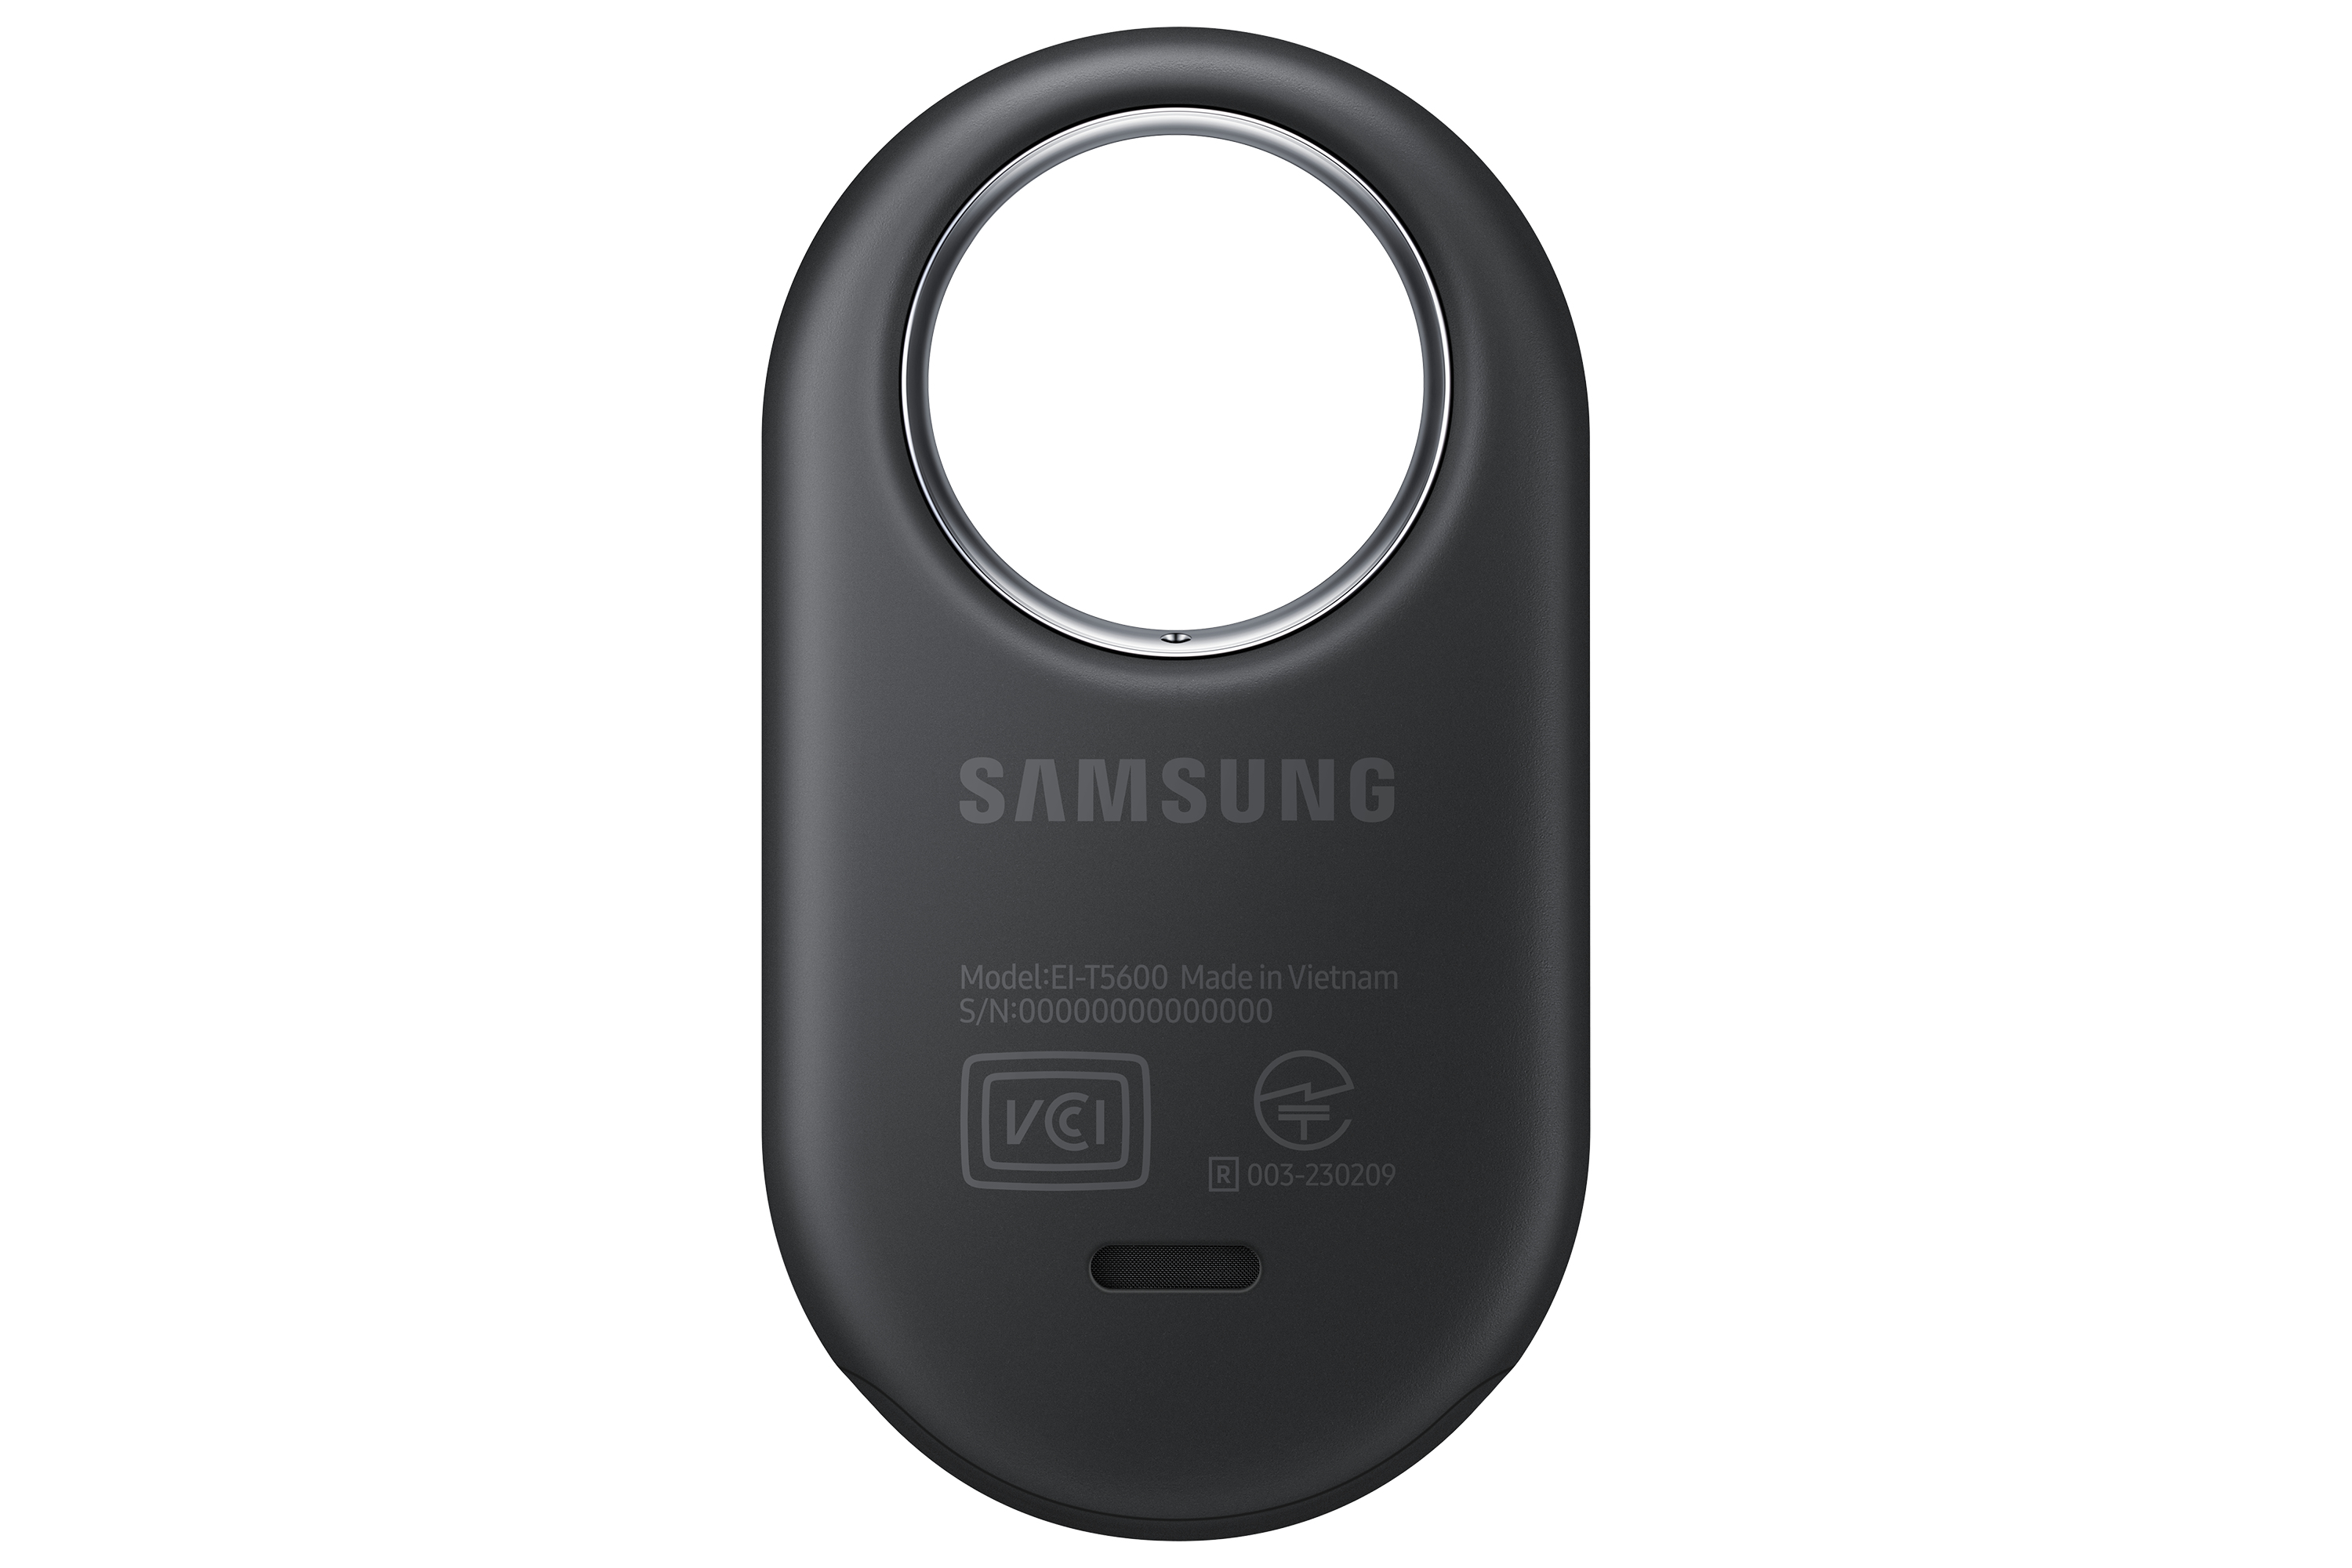 Samsung - Samsung Galaxy SmartTag 2 (2023)